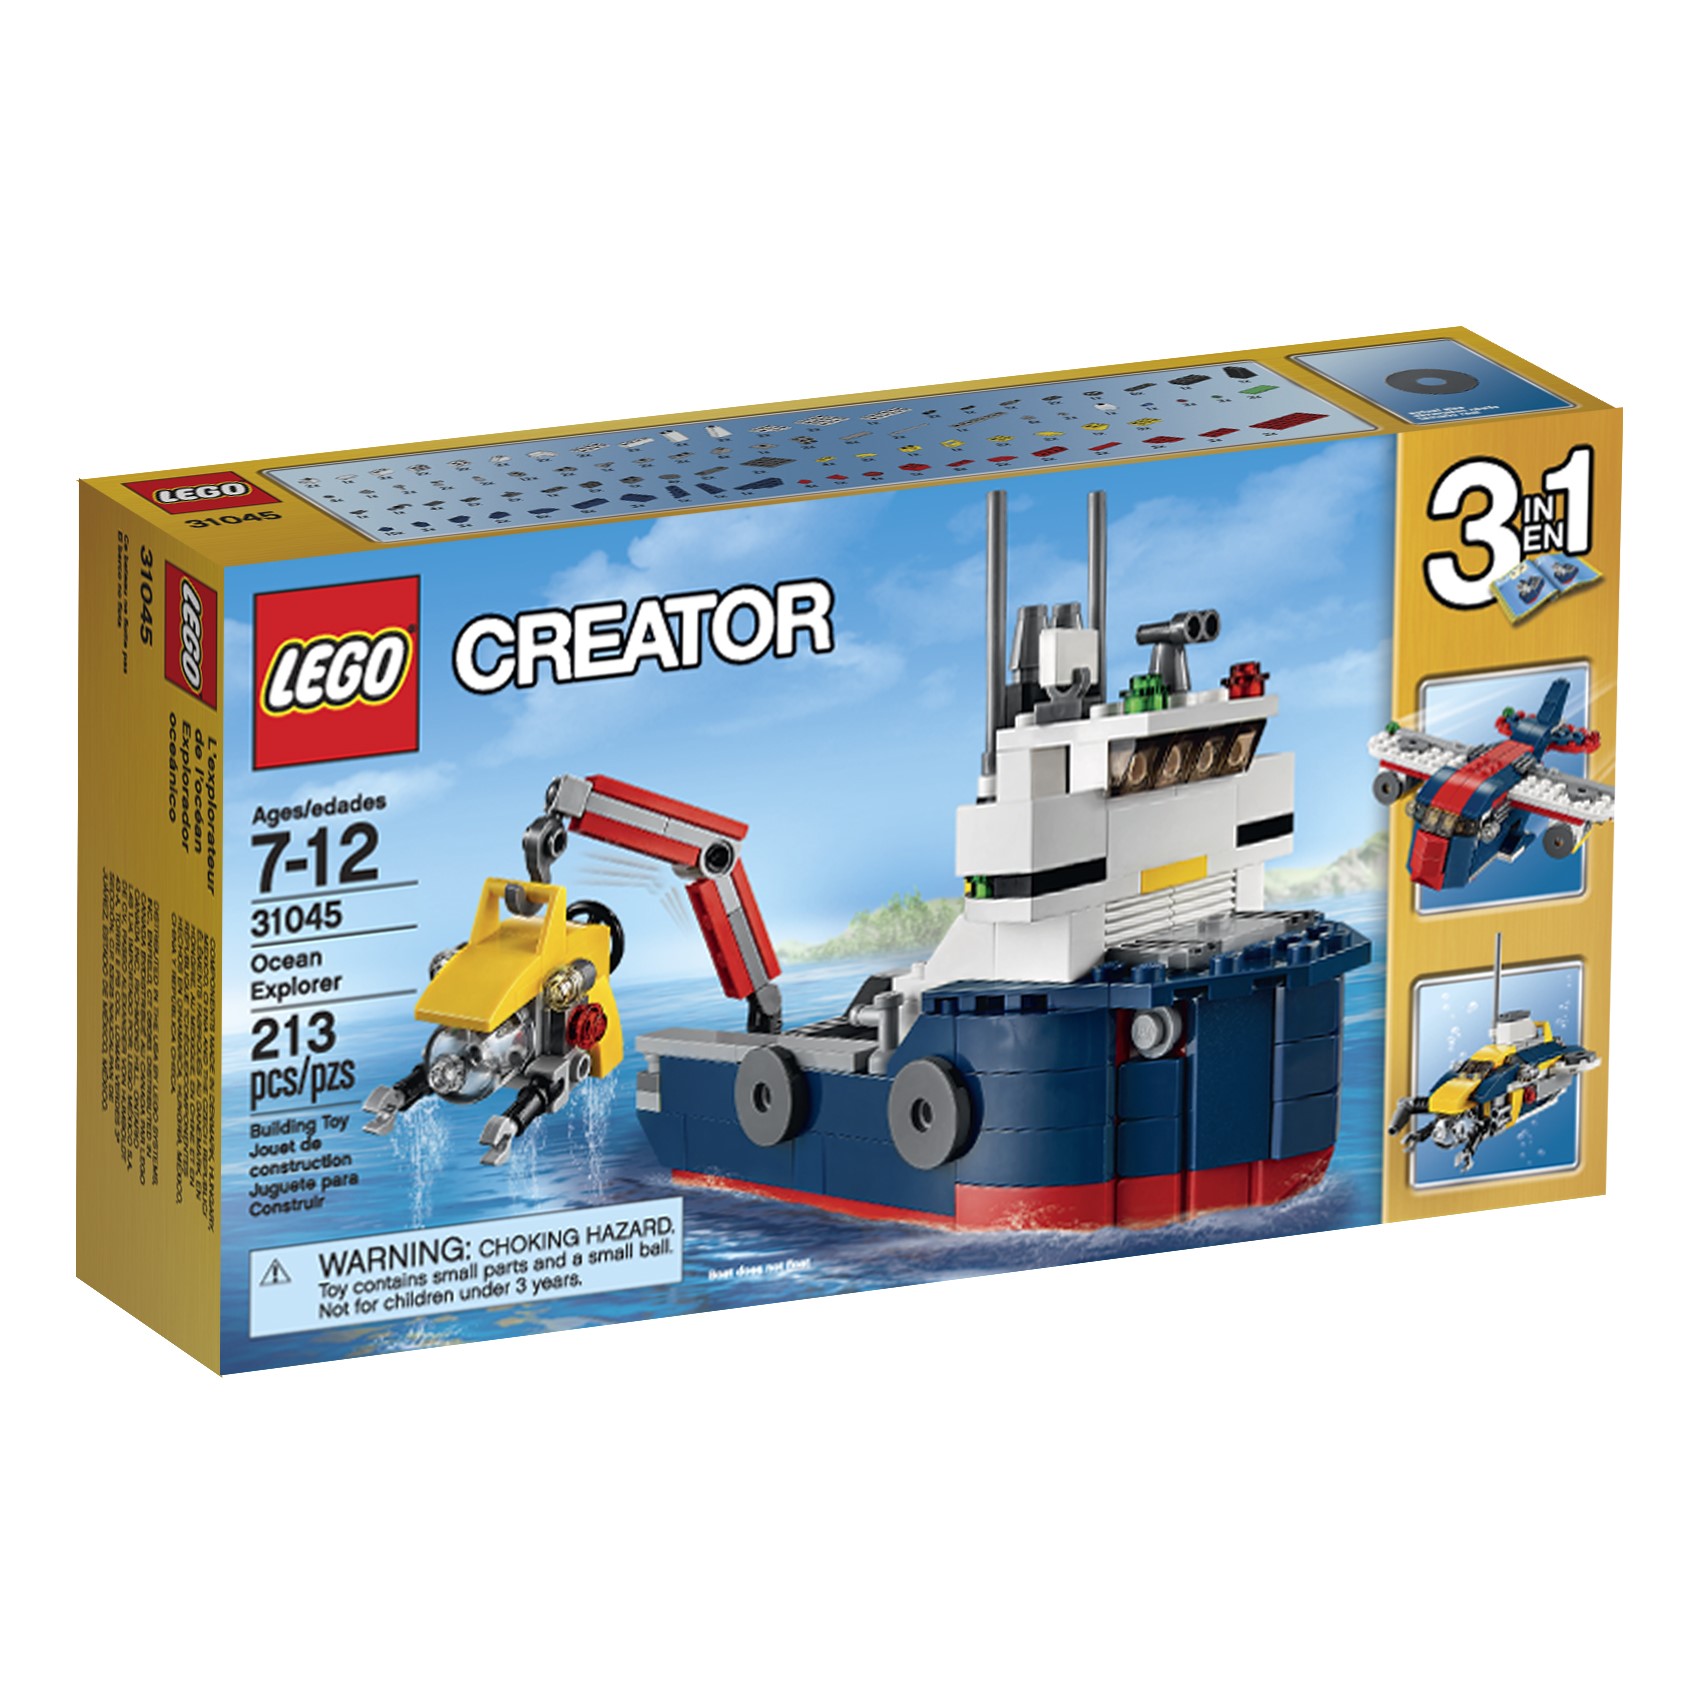 LEGO Creator Ocean Explorer 31045 - image 1 of 2